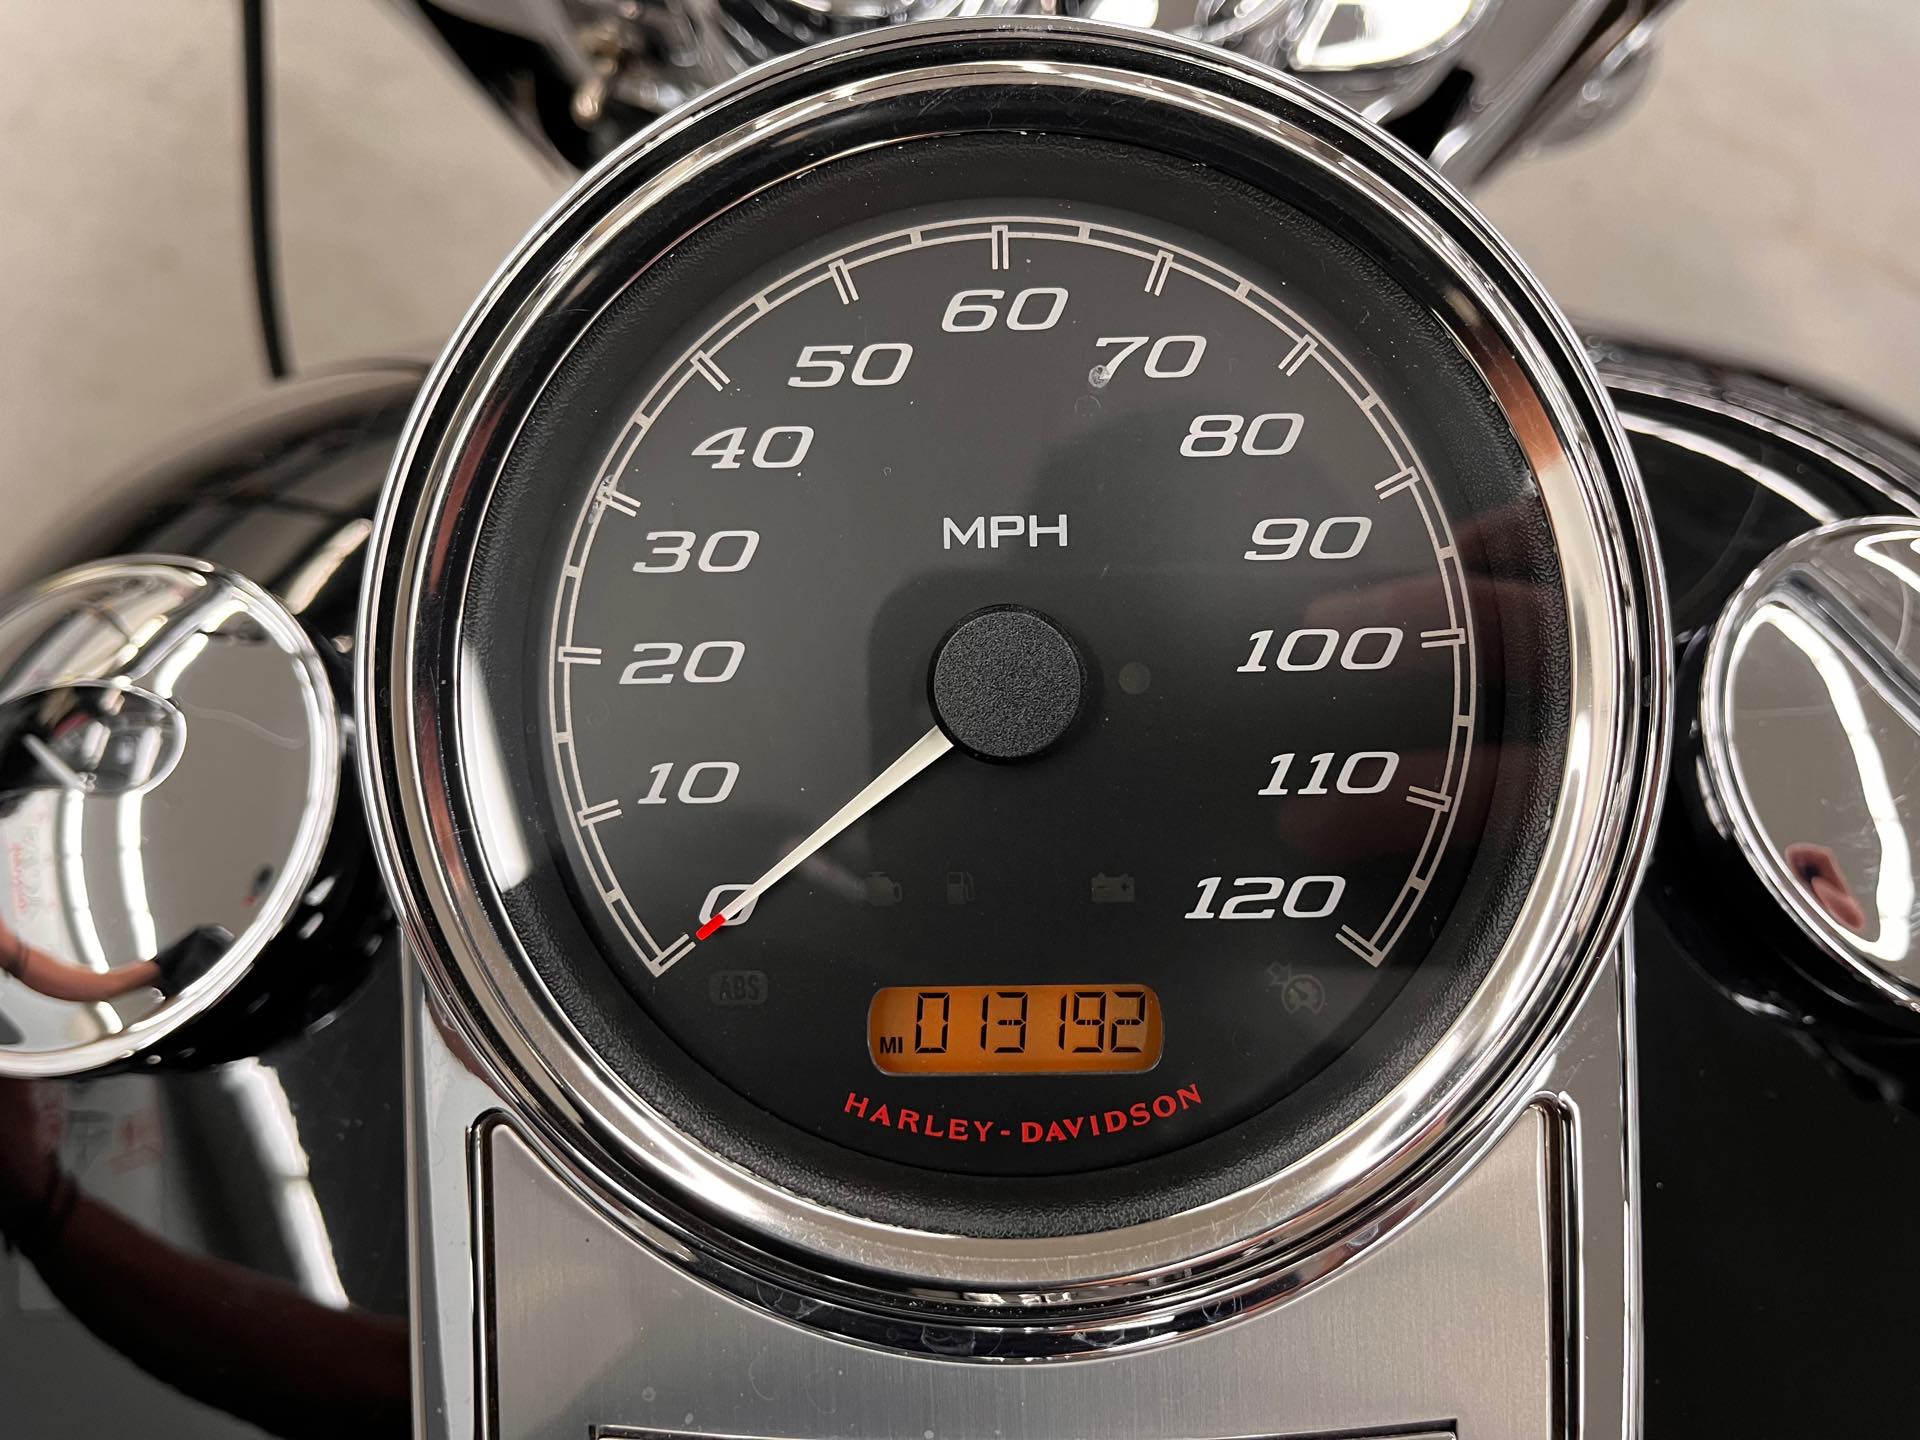 2015 Harley-Davidson Road King Base at Aces Motorcycles - Denver